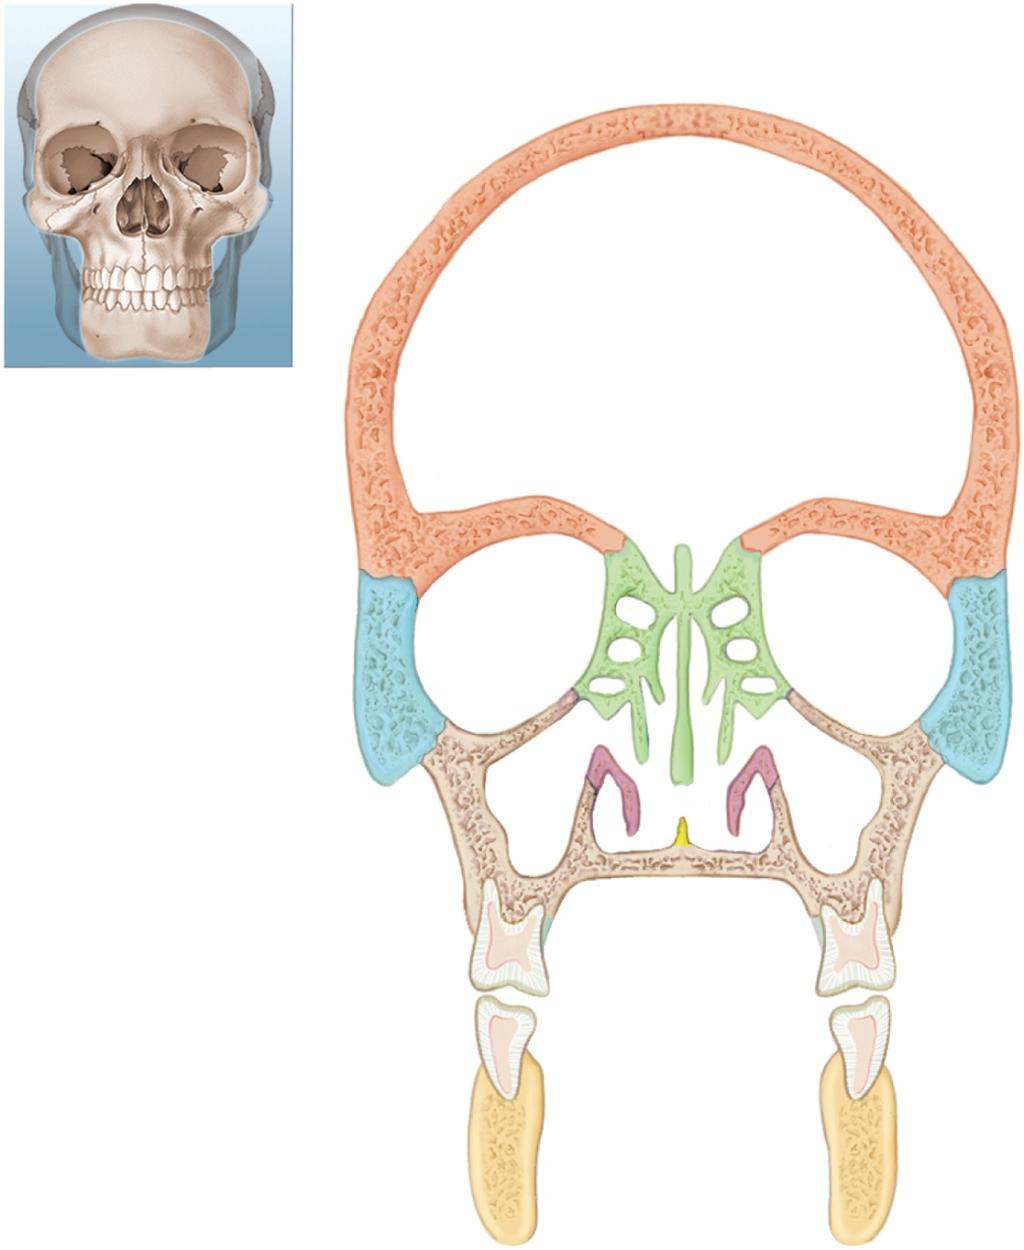 Major Skull Cavities Cranial cavity Ethmoid air cells Frontal bone Ethmoid bone Orbit Superior Nasal conchae